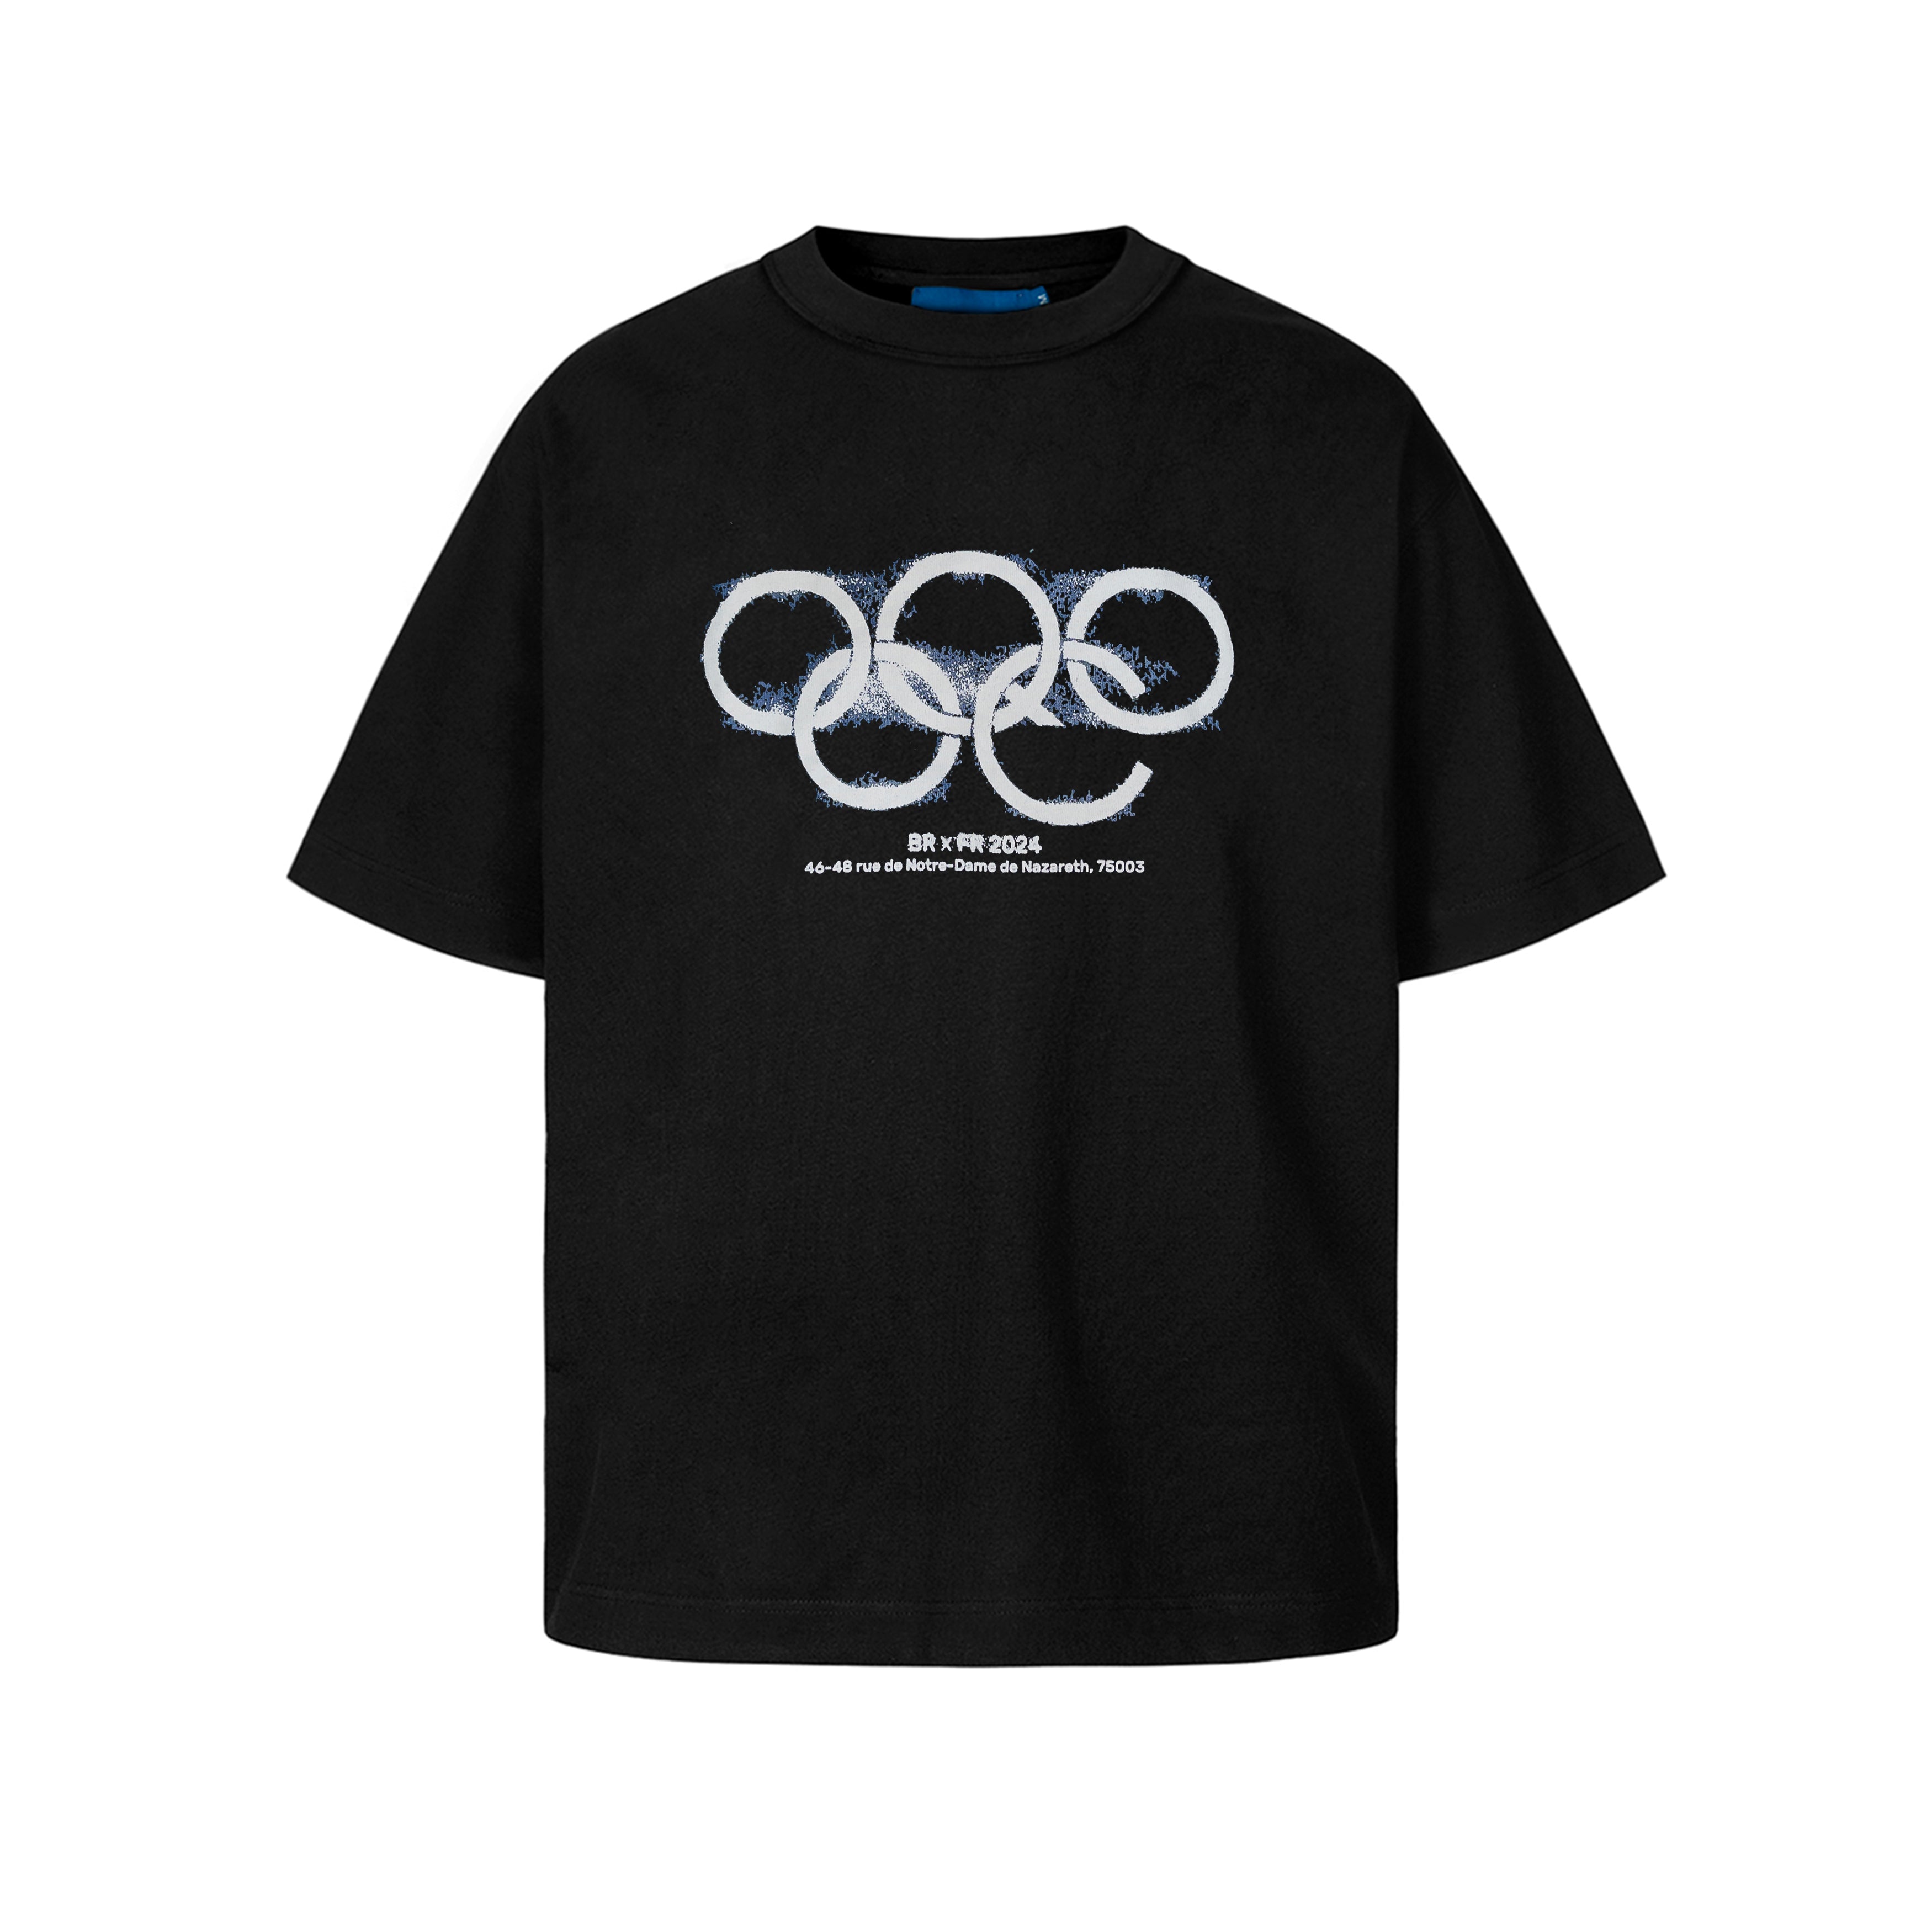 QUADRO CREATIONS - 24 Olympic Tee "Black"